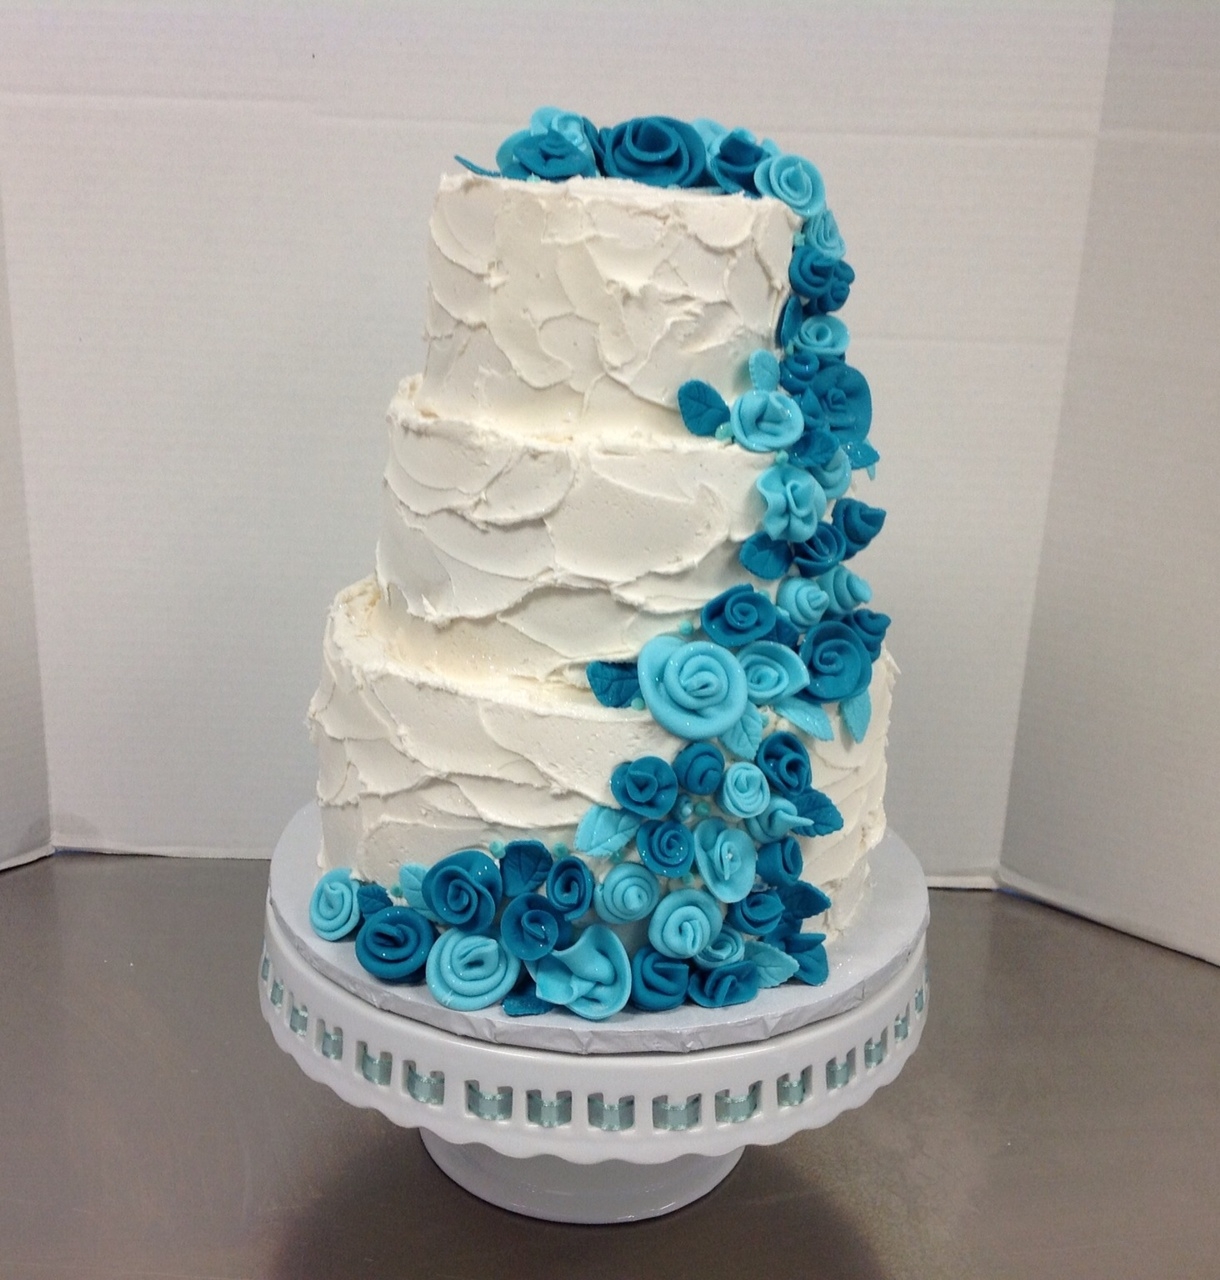 Teal Buttercream Wedding Cake